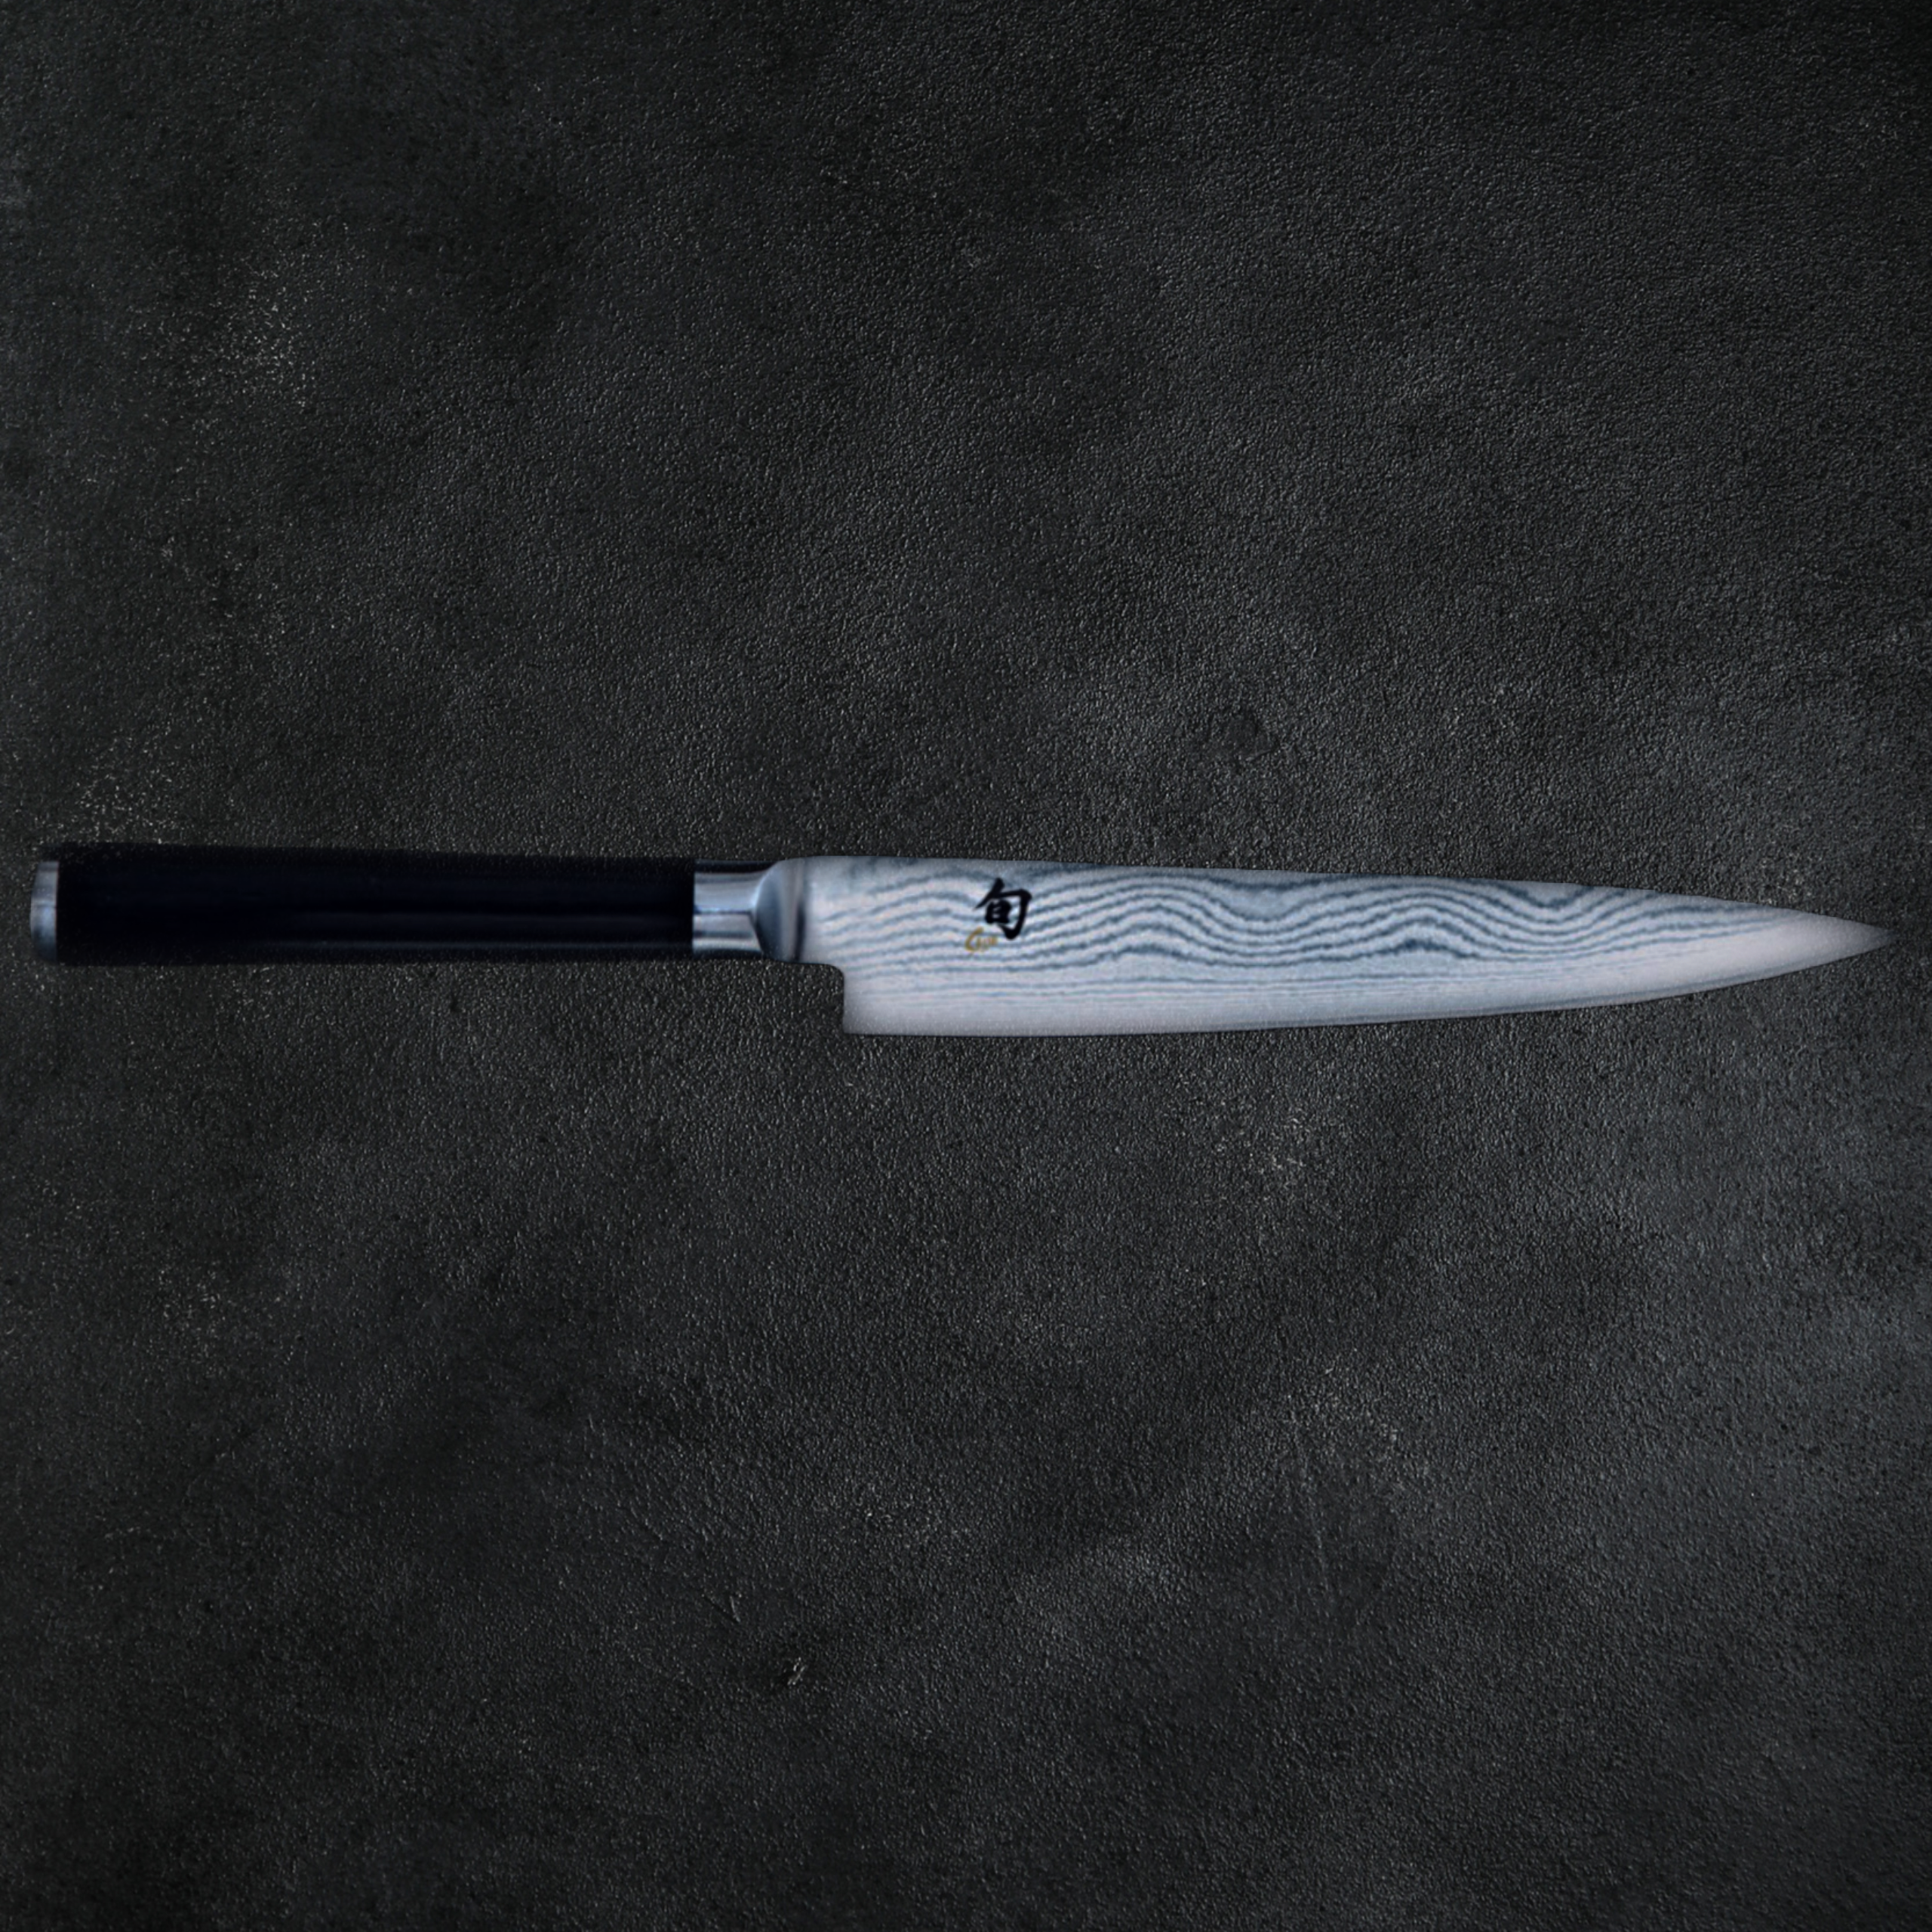 Kai Shun Classic Paring Knife 9cm